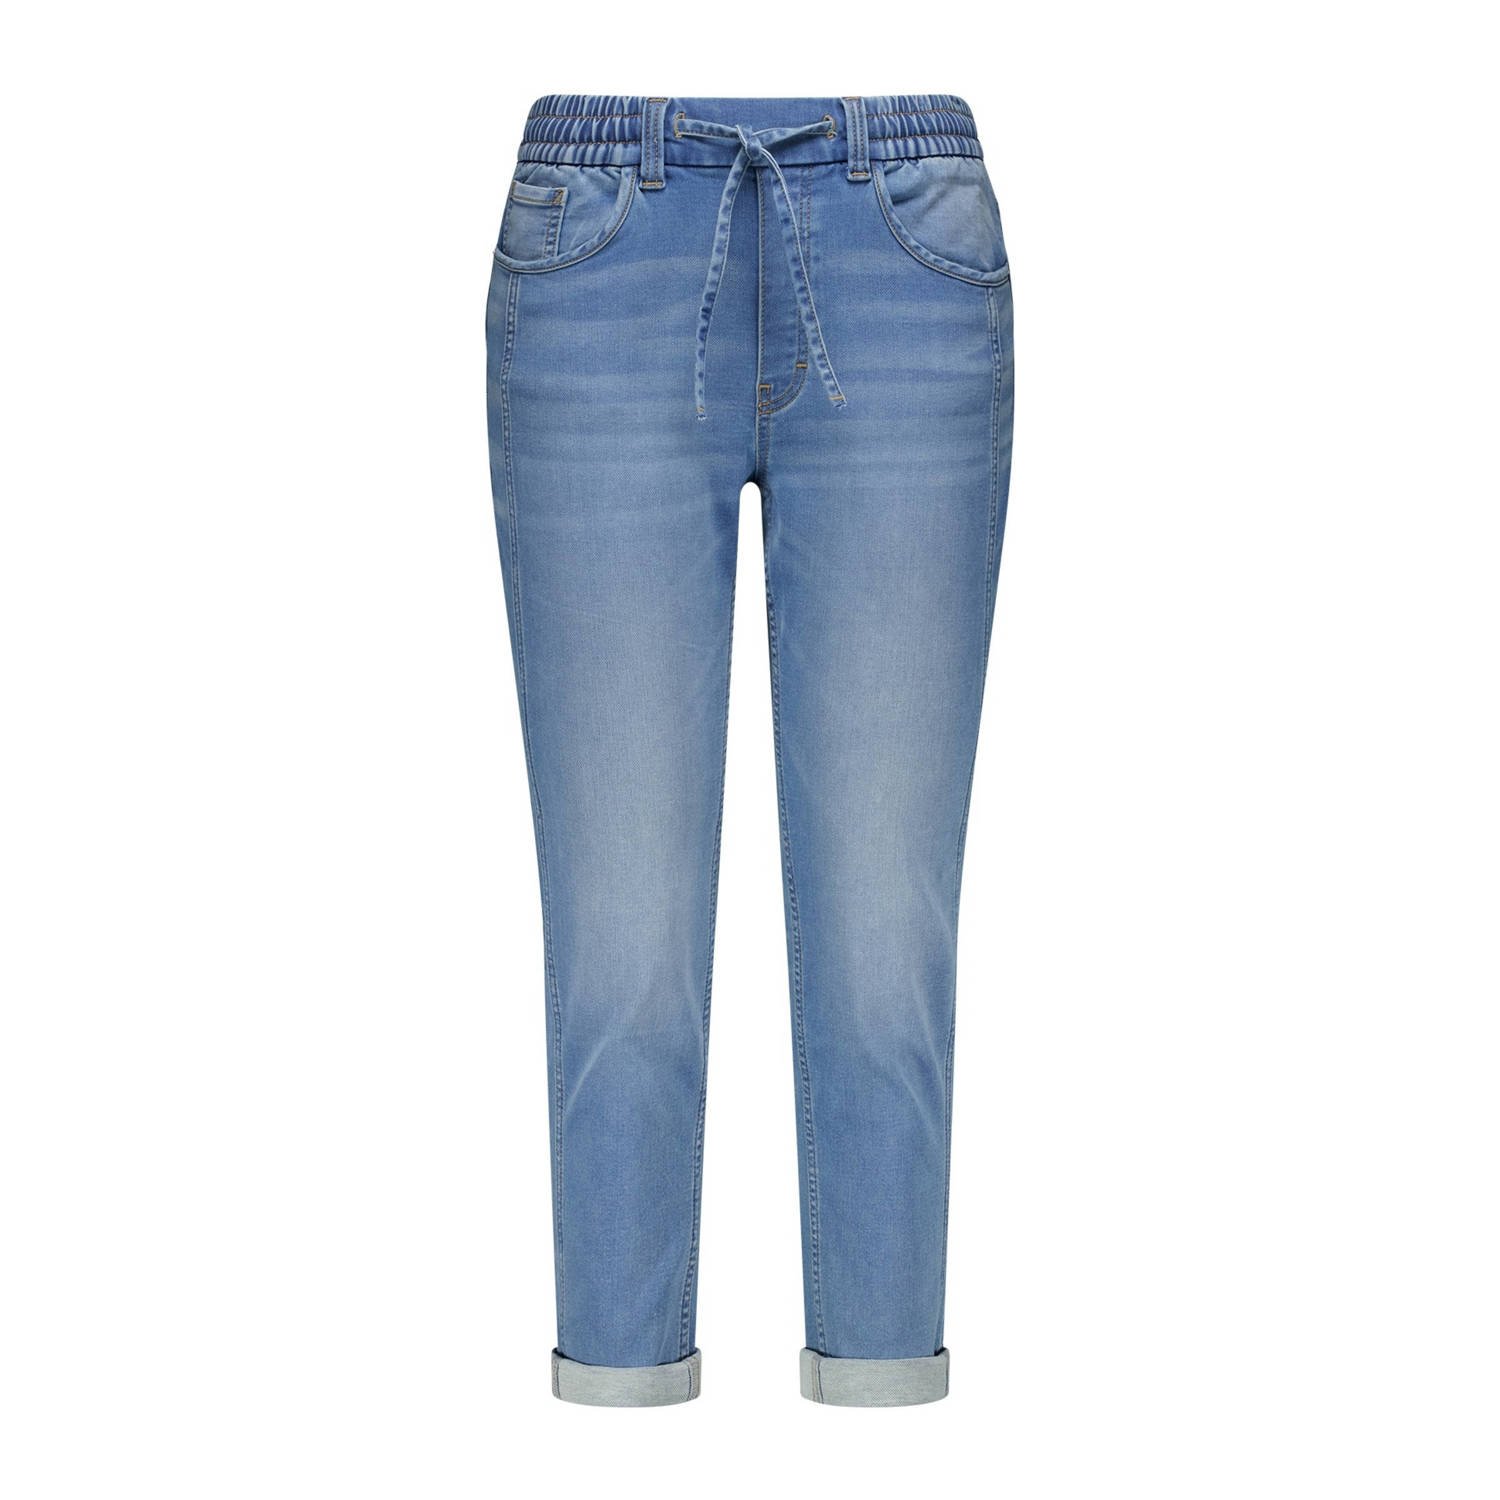 MS Mode cropped jeans light blue denim